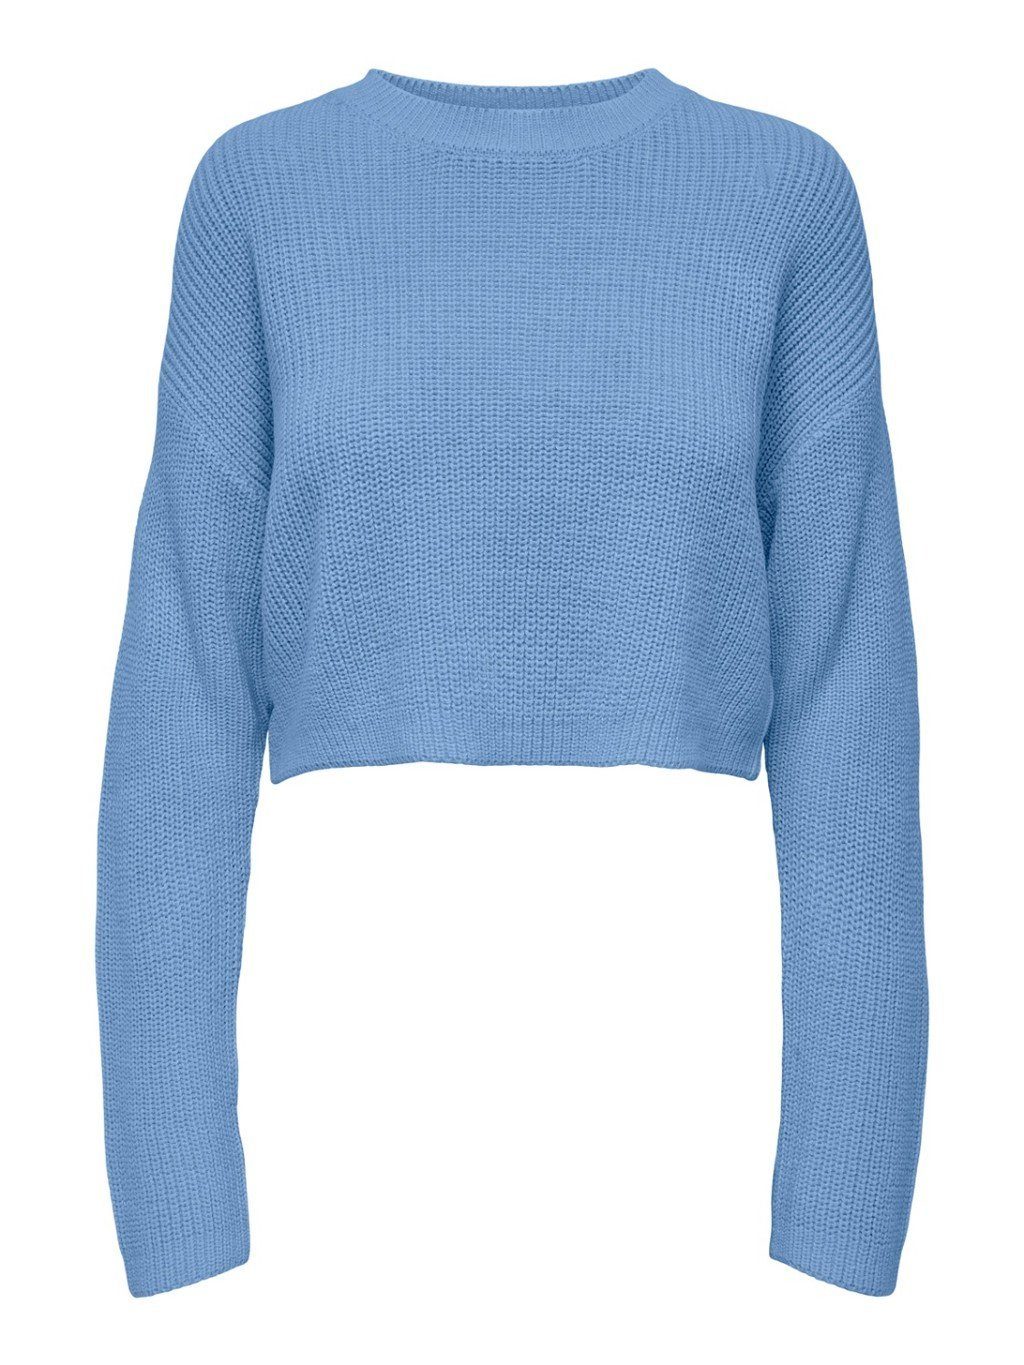 ONLY Strickpullover Cropped 4579 in Pullover Blau Rippstrick Sweater ONLMALAVI Kurzer Langarm